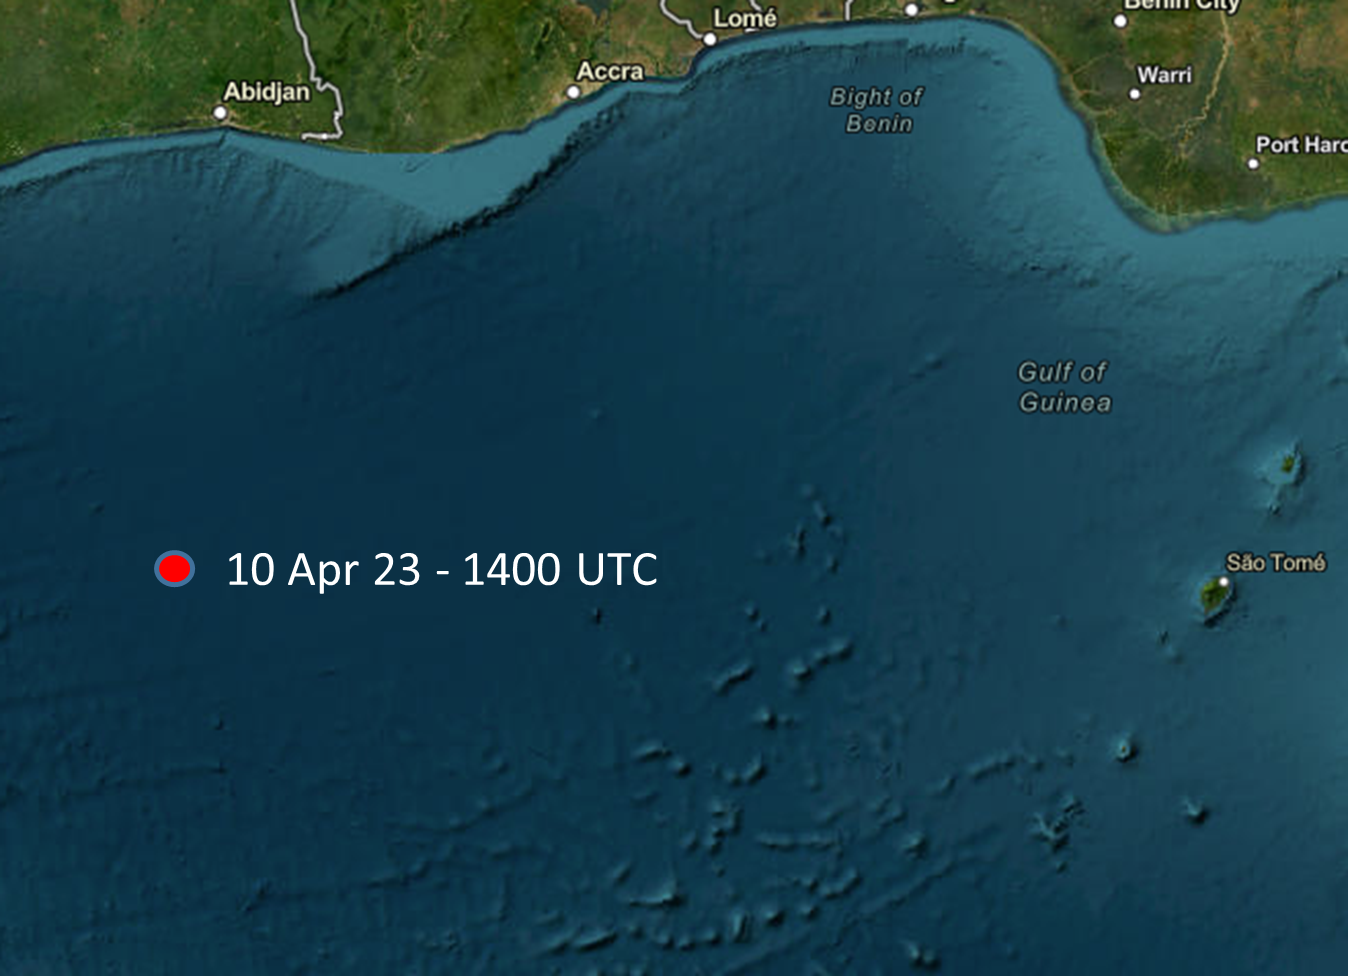 Incident Alert - Vessel Boarded 300 nm South of Abidjan Gulf of Guinea